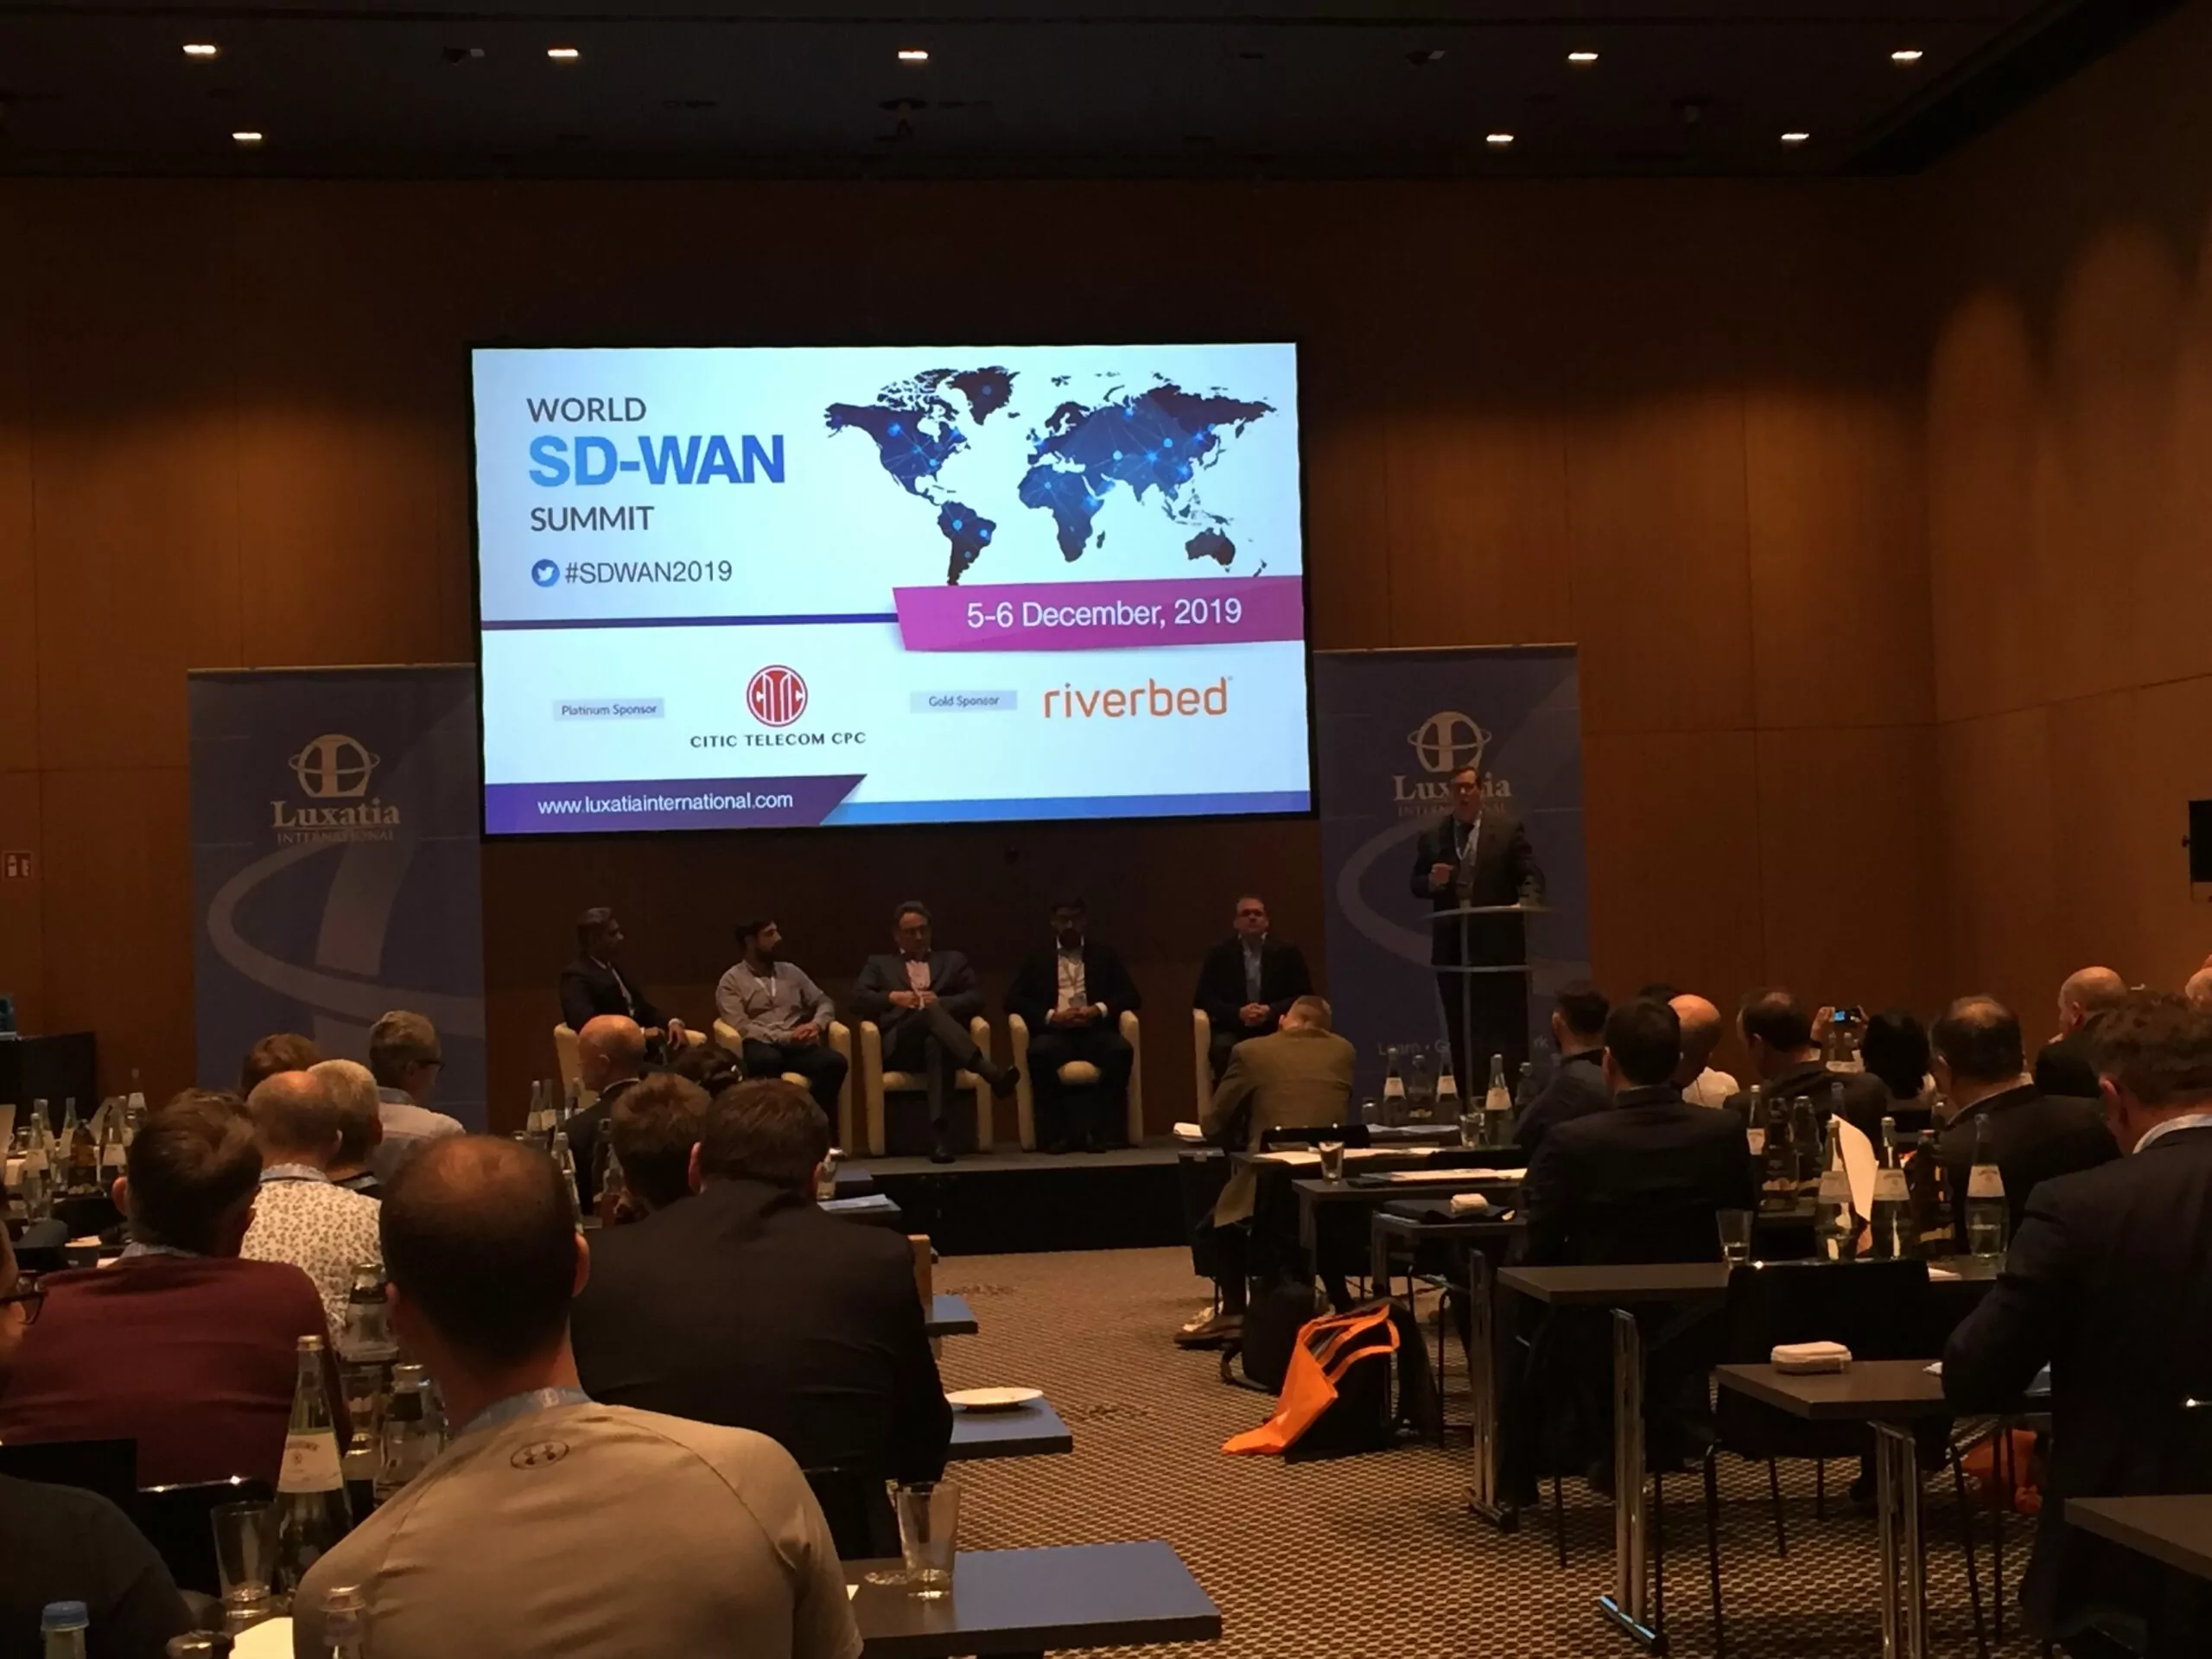 World SD-WAN Summit panel discussion